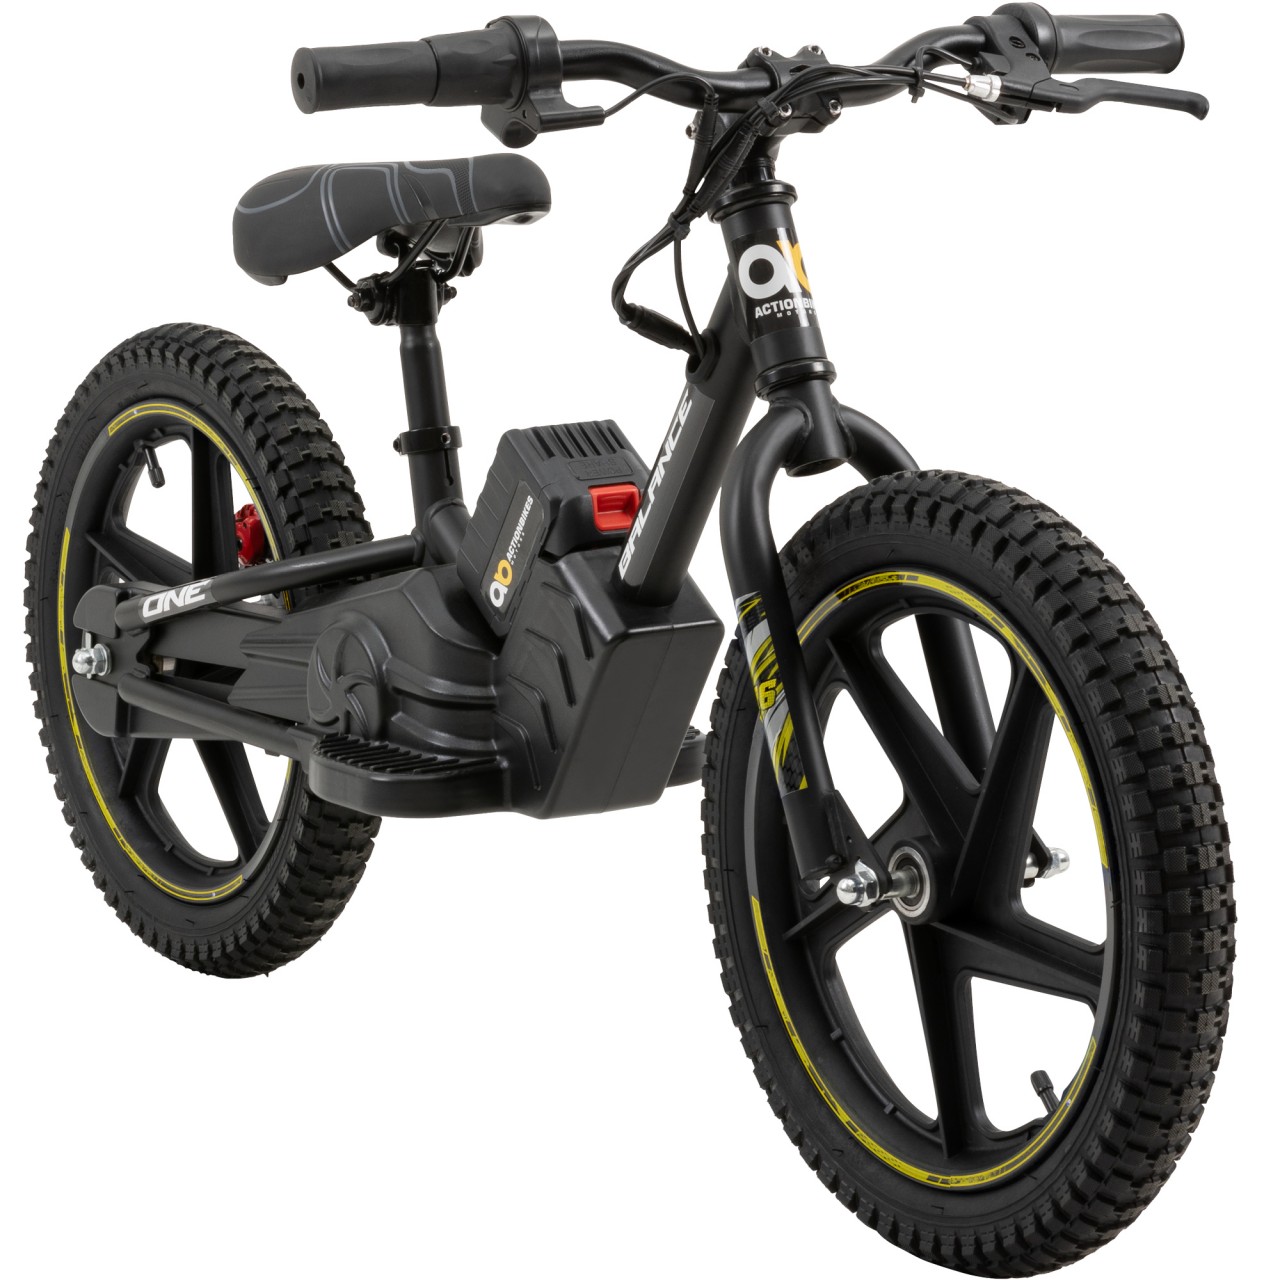 01-kindermotorraeder-gelb-actionbikes-motors-balance-bike-16-zoll-start